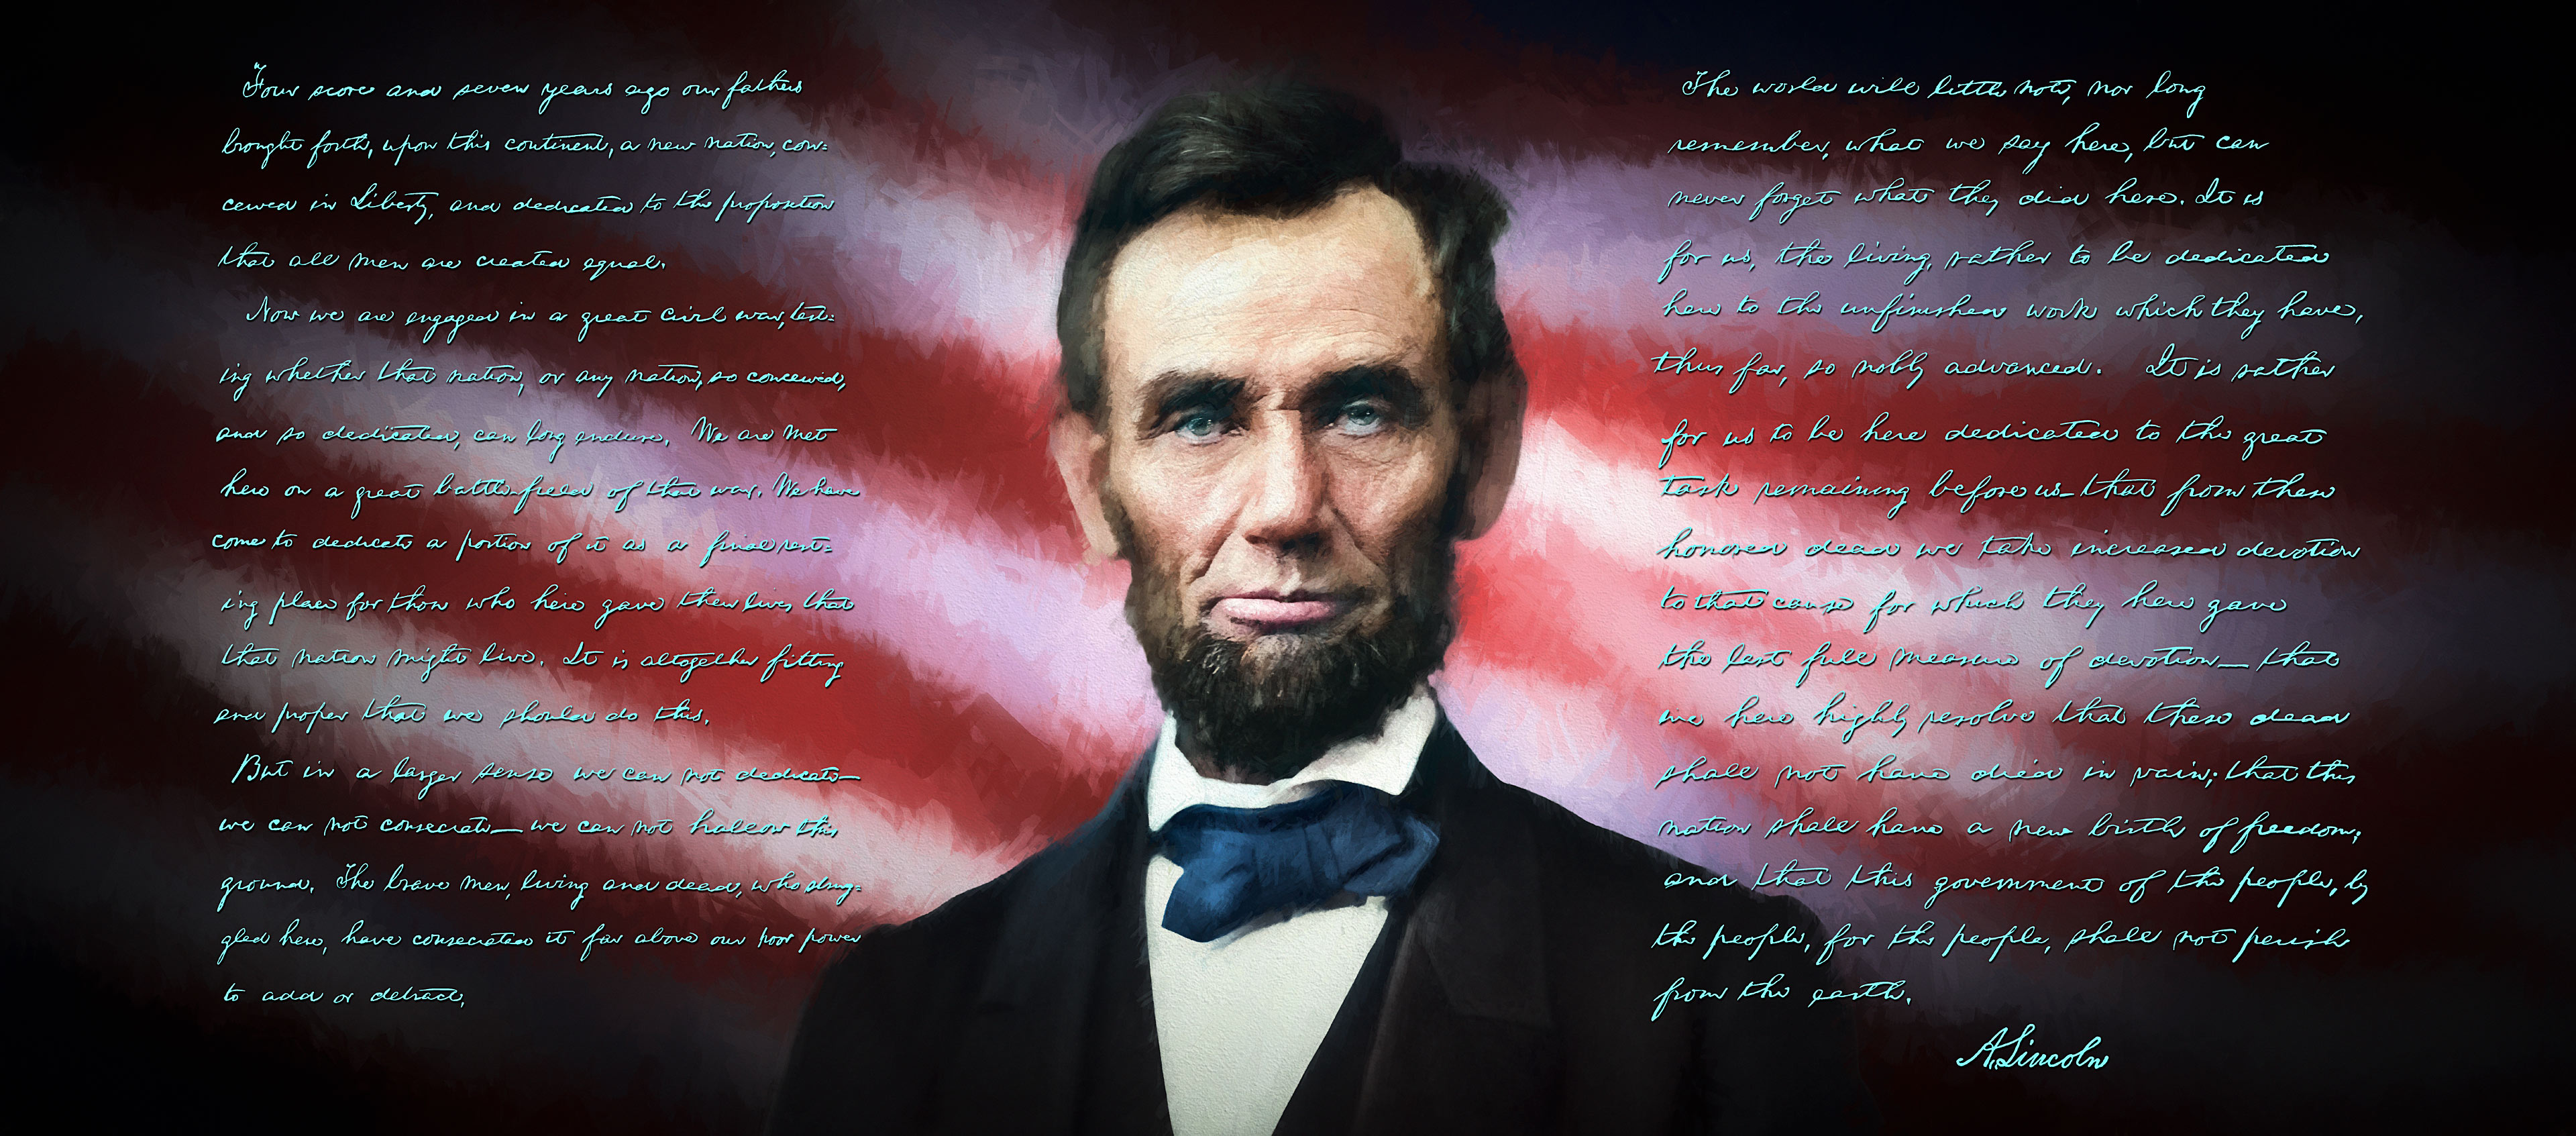 Gettysburg Address, Abraham Lincoln